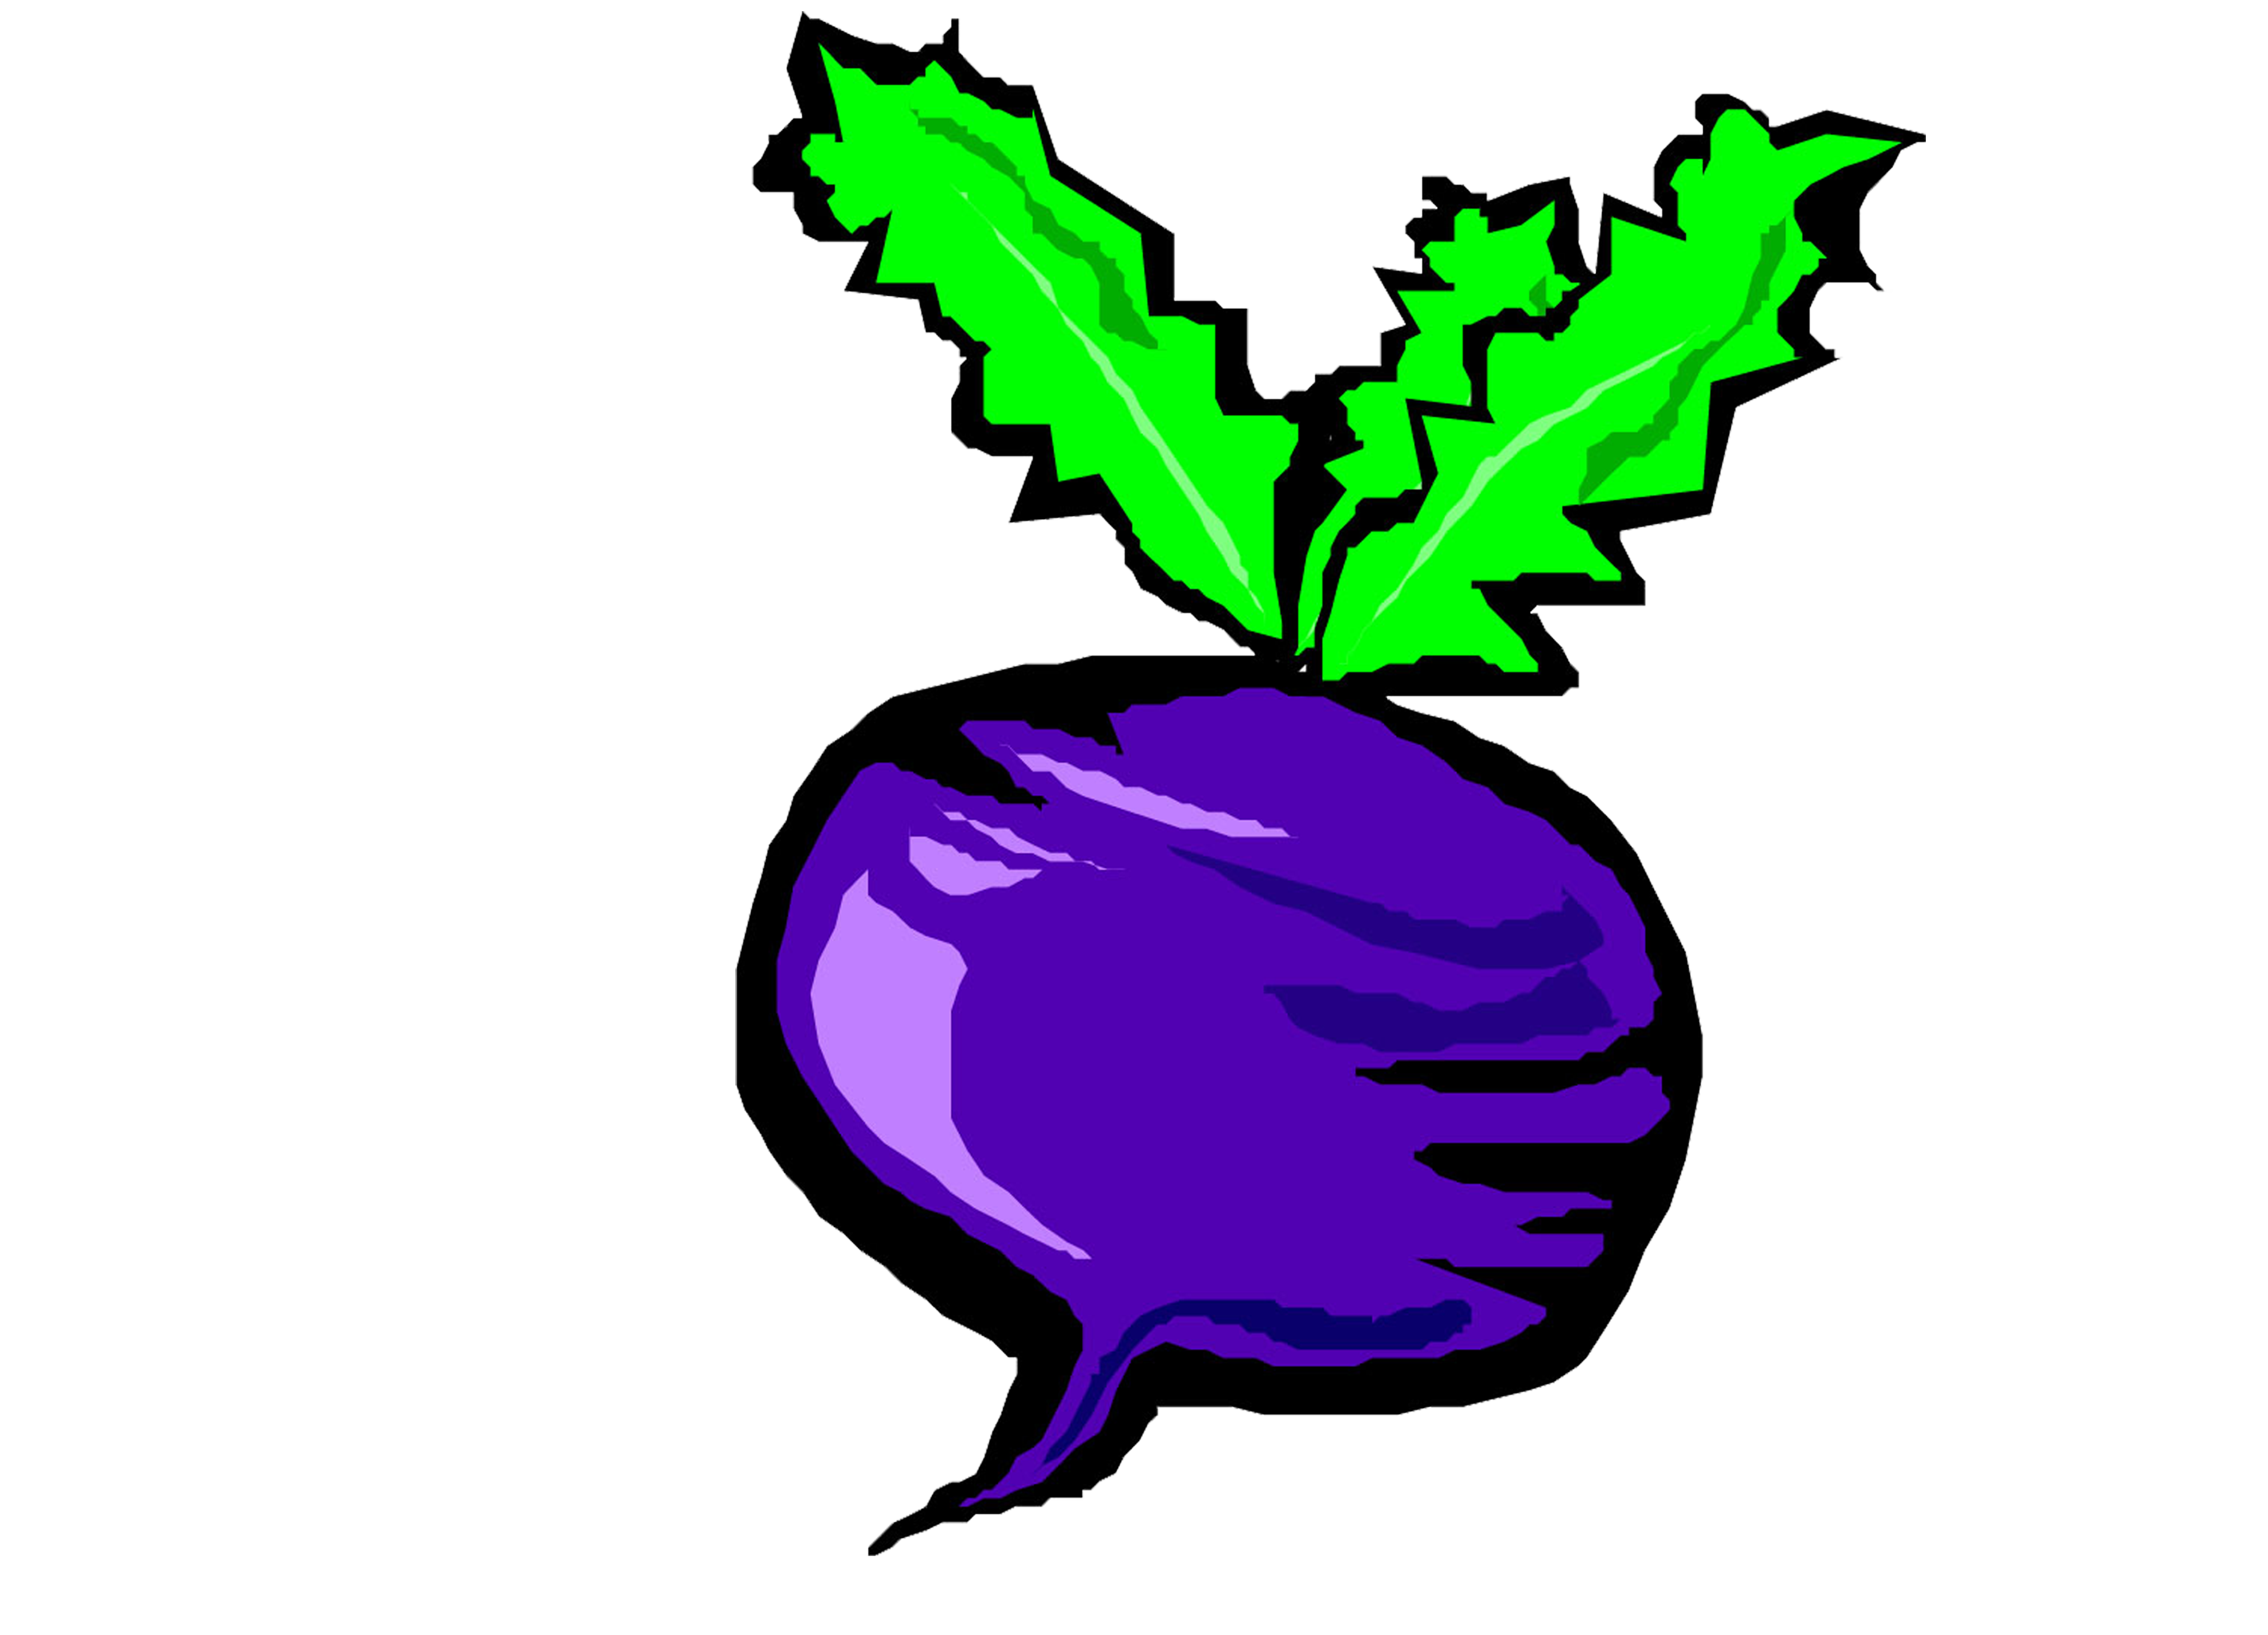 eggplant clipart drawn